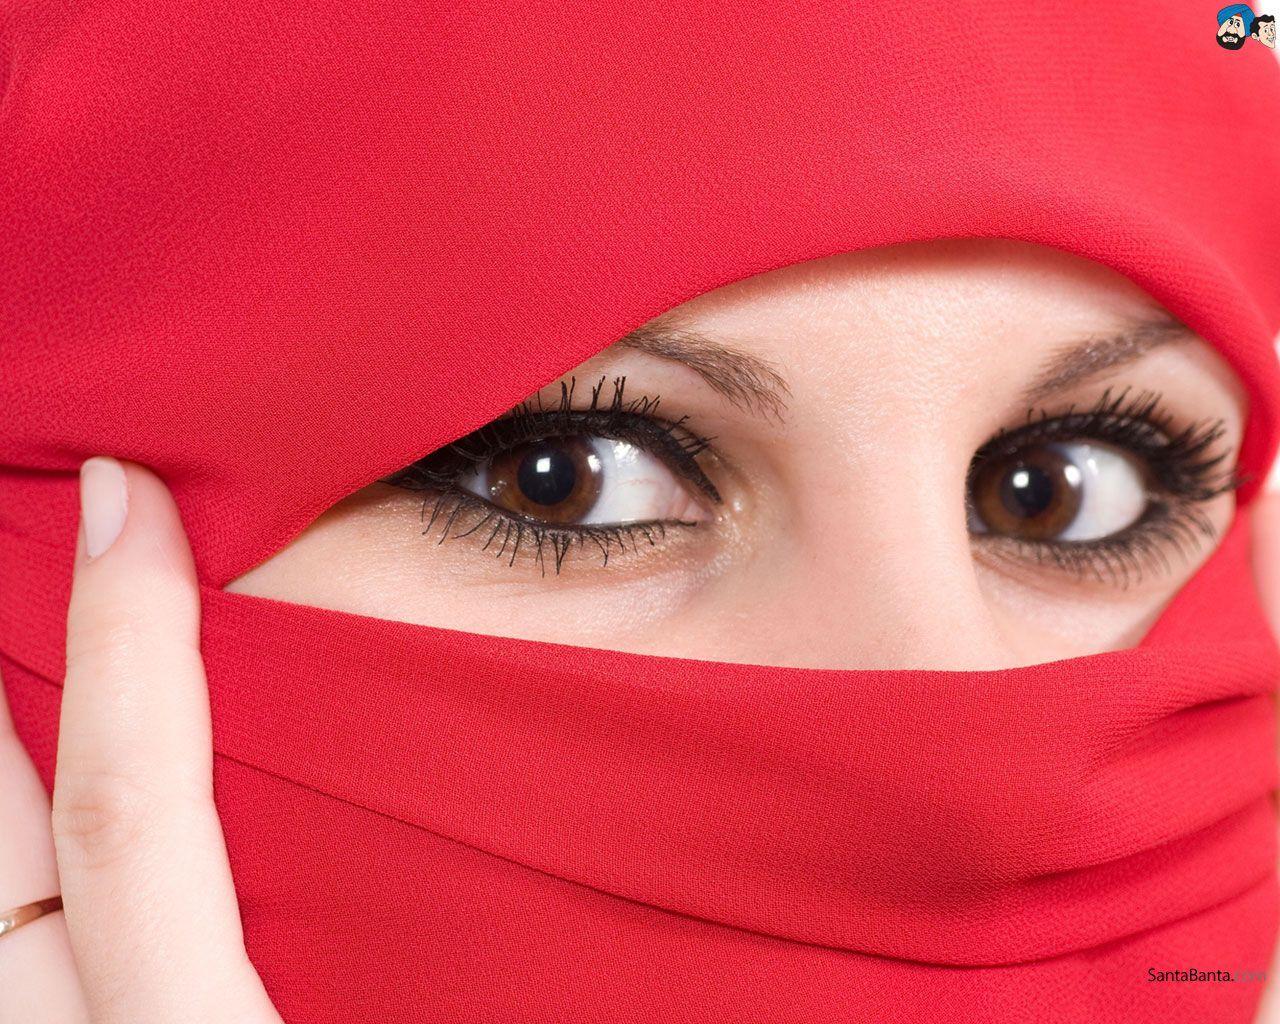 Arab Women in Hijab. Arab women, Fashion gal, Hijab